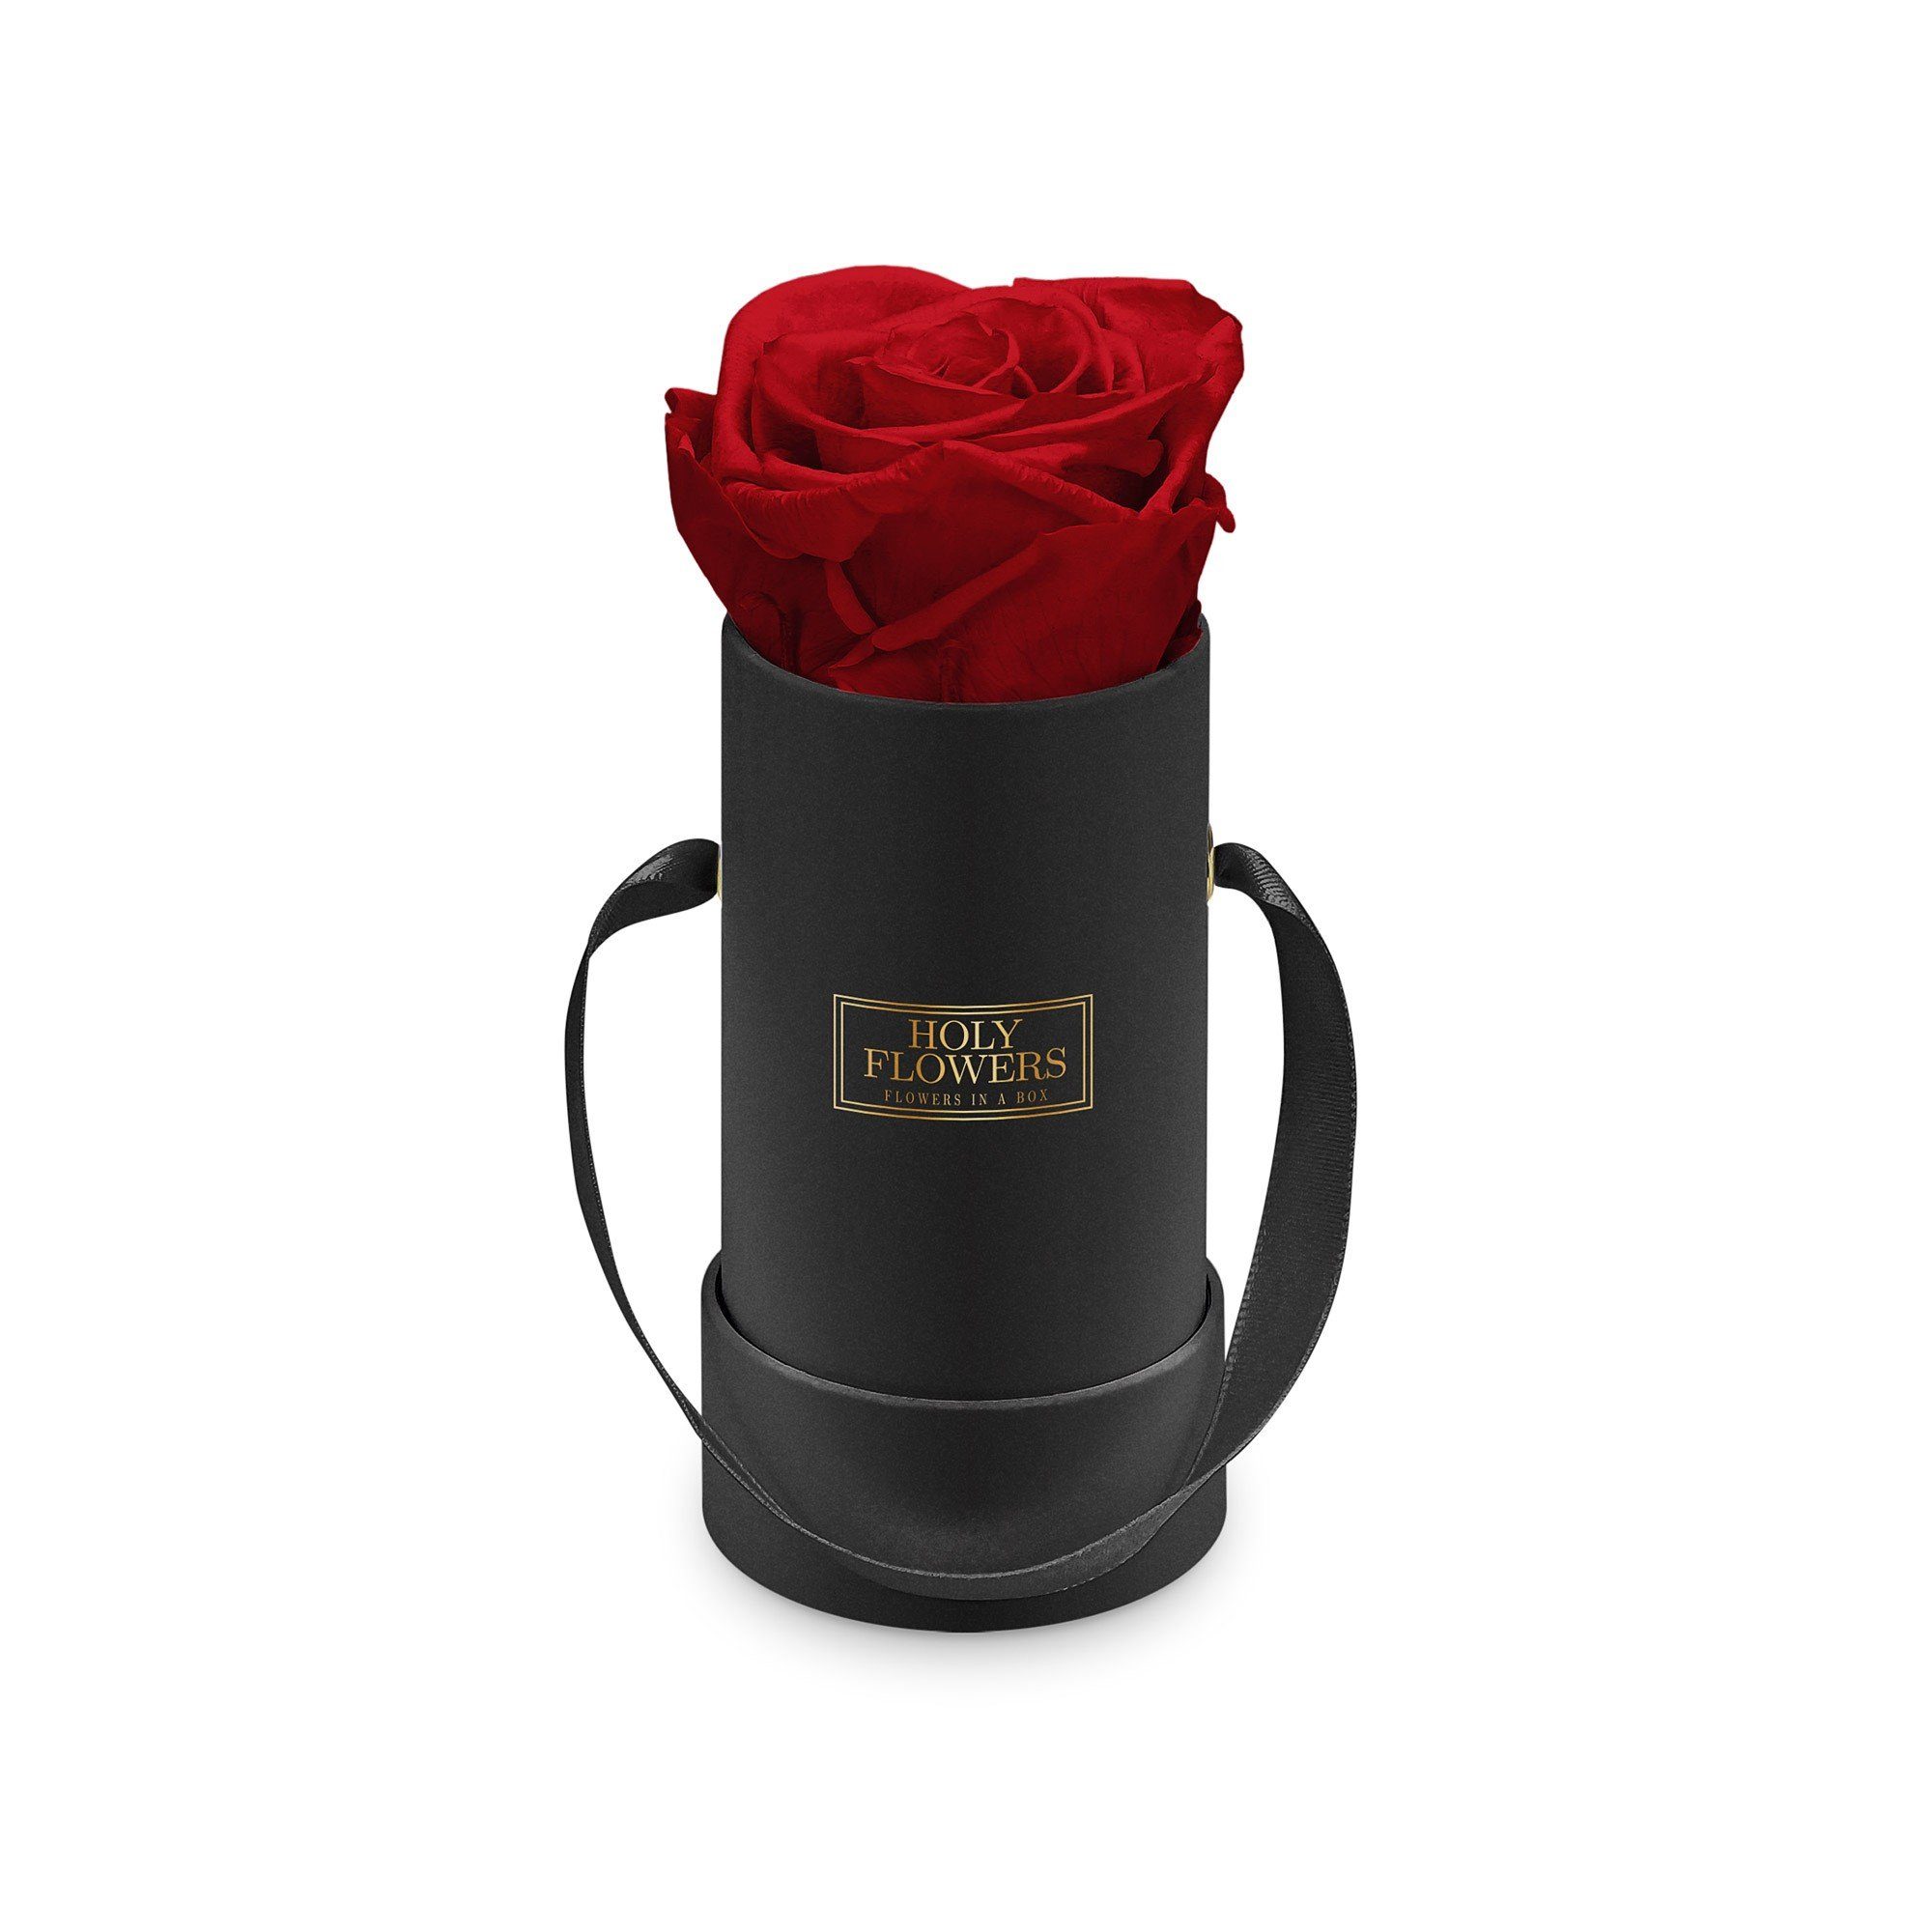 Kunstblume Rosenbox in schwarz mit 1er Infinity Rose I 3 Jahre haltbar I Echte, duftende konservierte Blumen I by Raul Richter Infinity Rose, Holy Flowers, Höhe 9 cm